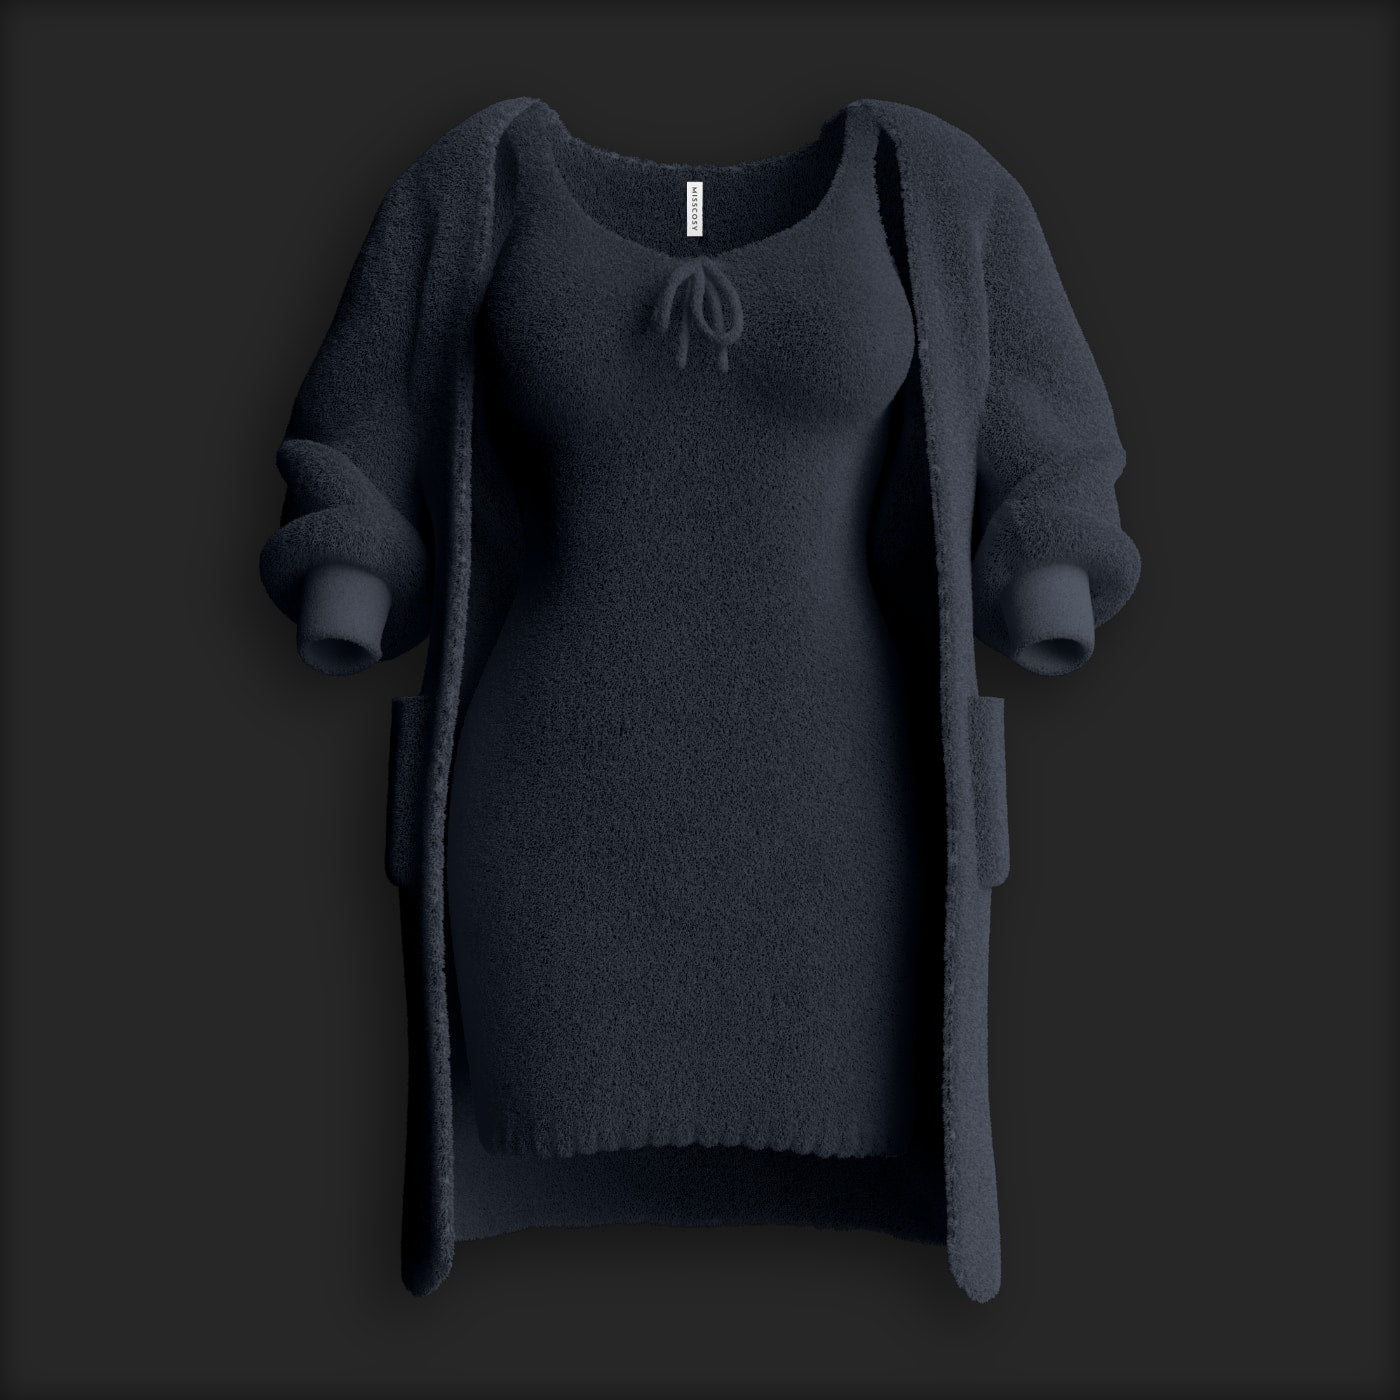 Cosy Knit Dress (2 Pieces) - Black